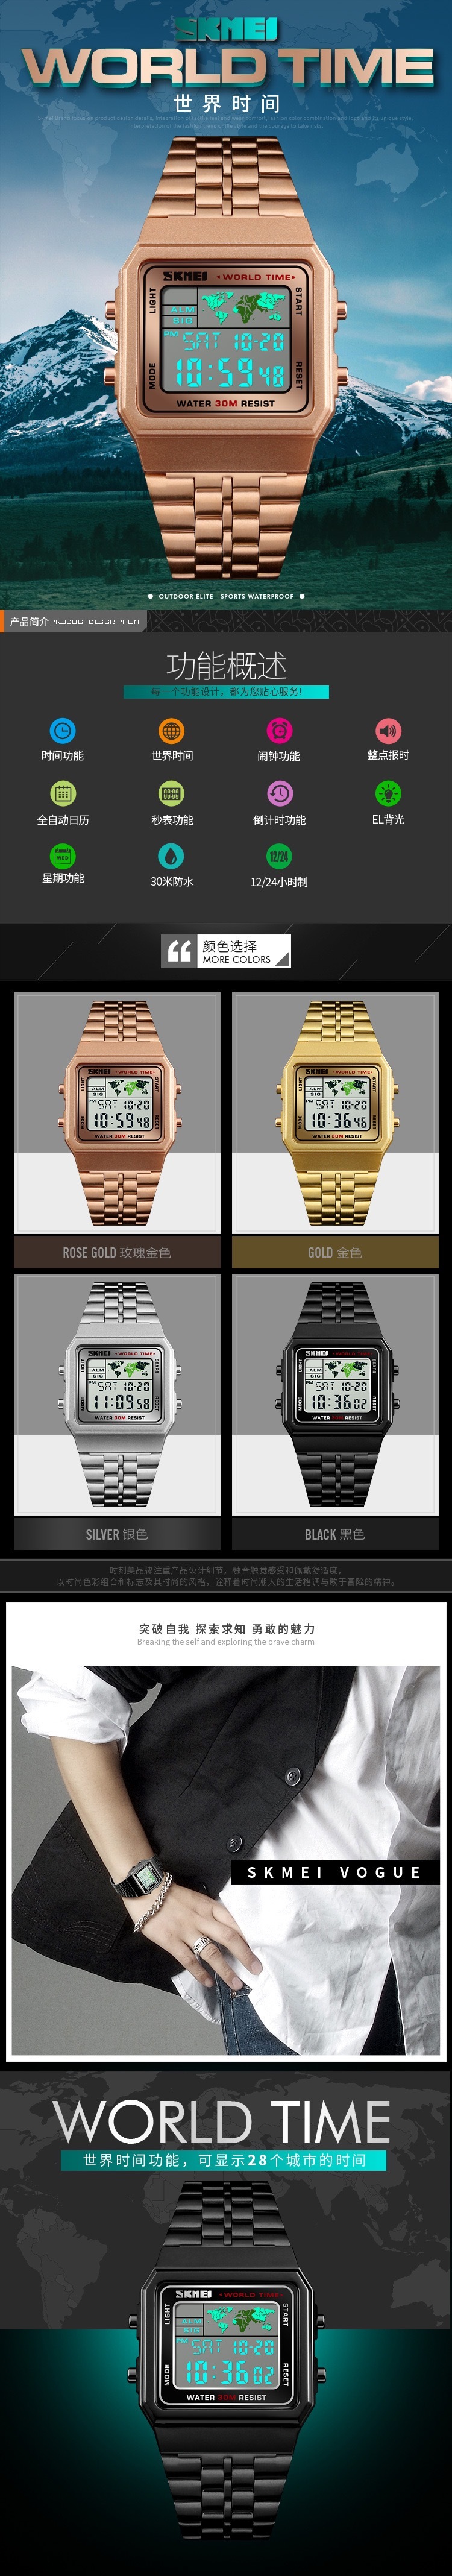 SKMEI新款商务时尚方形电子表 秒表倒计时世界时间多功能钢带手表详情2